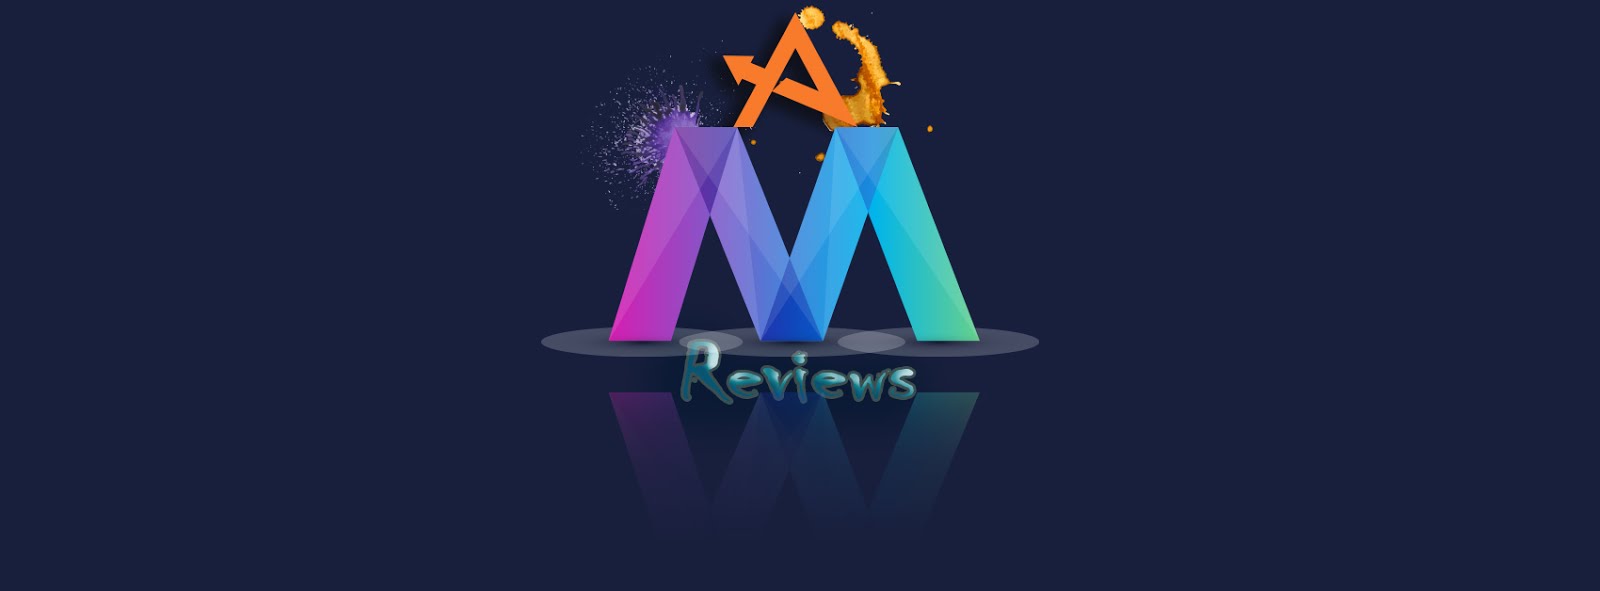 ma Reviews